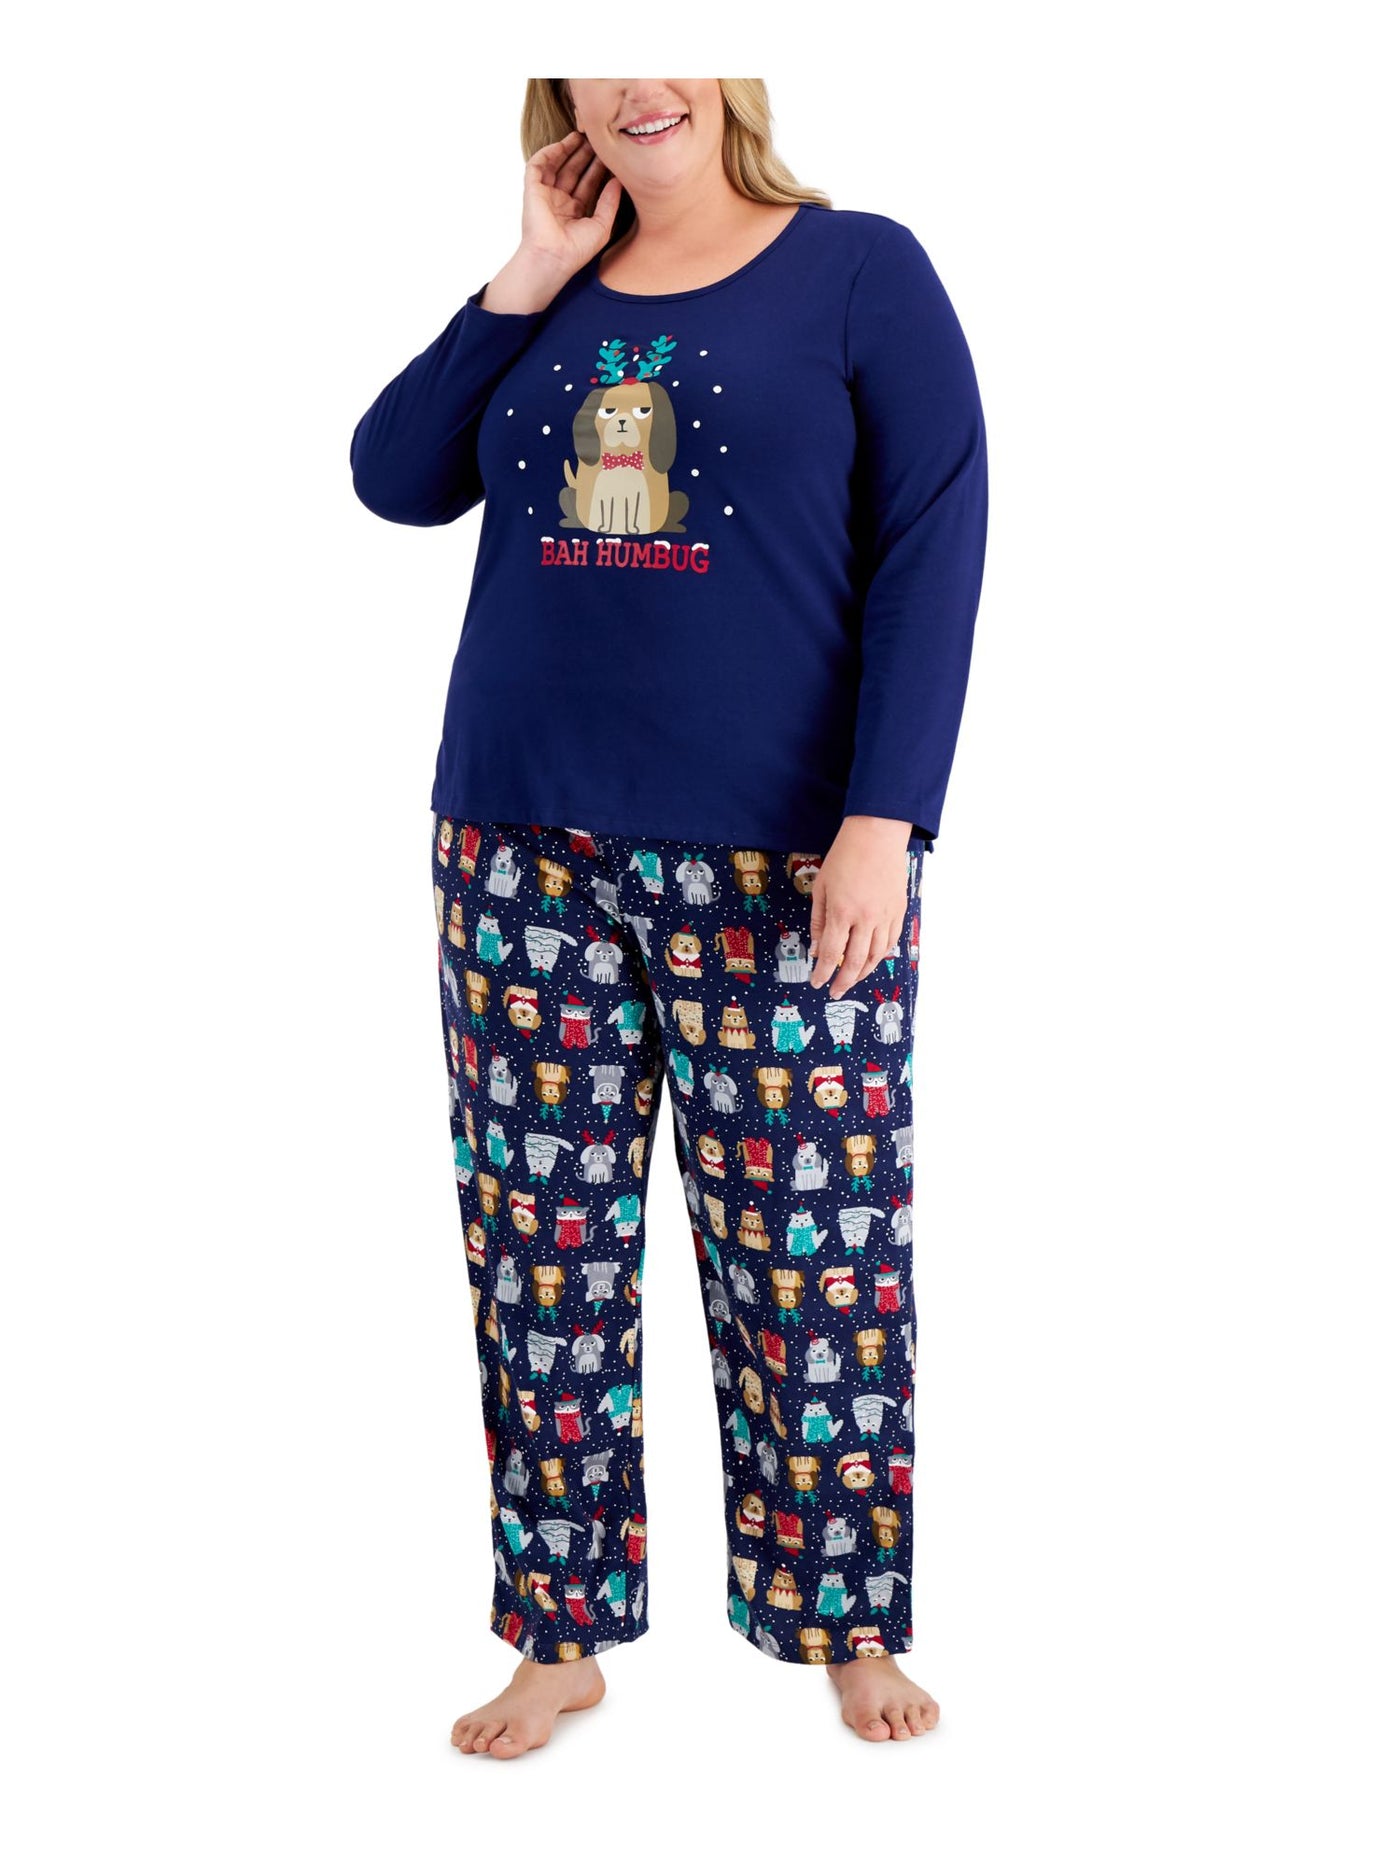 FAMILY PJs Womens Navy Graphic Elastic Band T-Shirt Top Straight leg Pants Pajamas Plus 1X